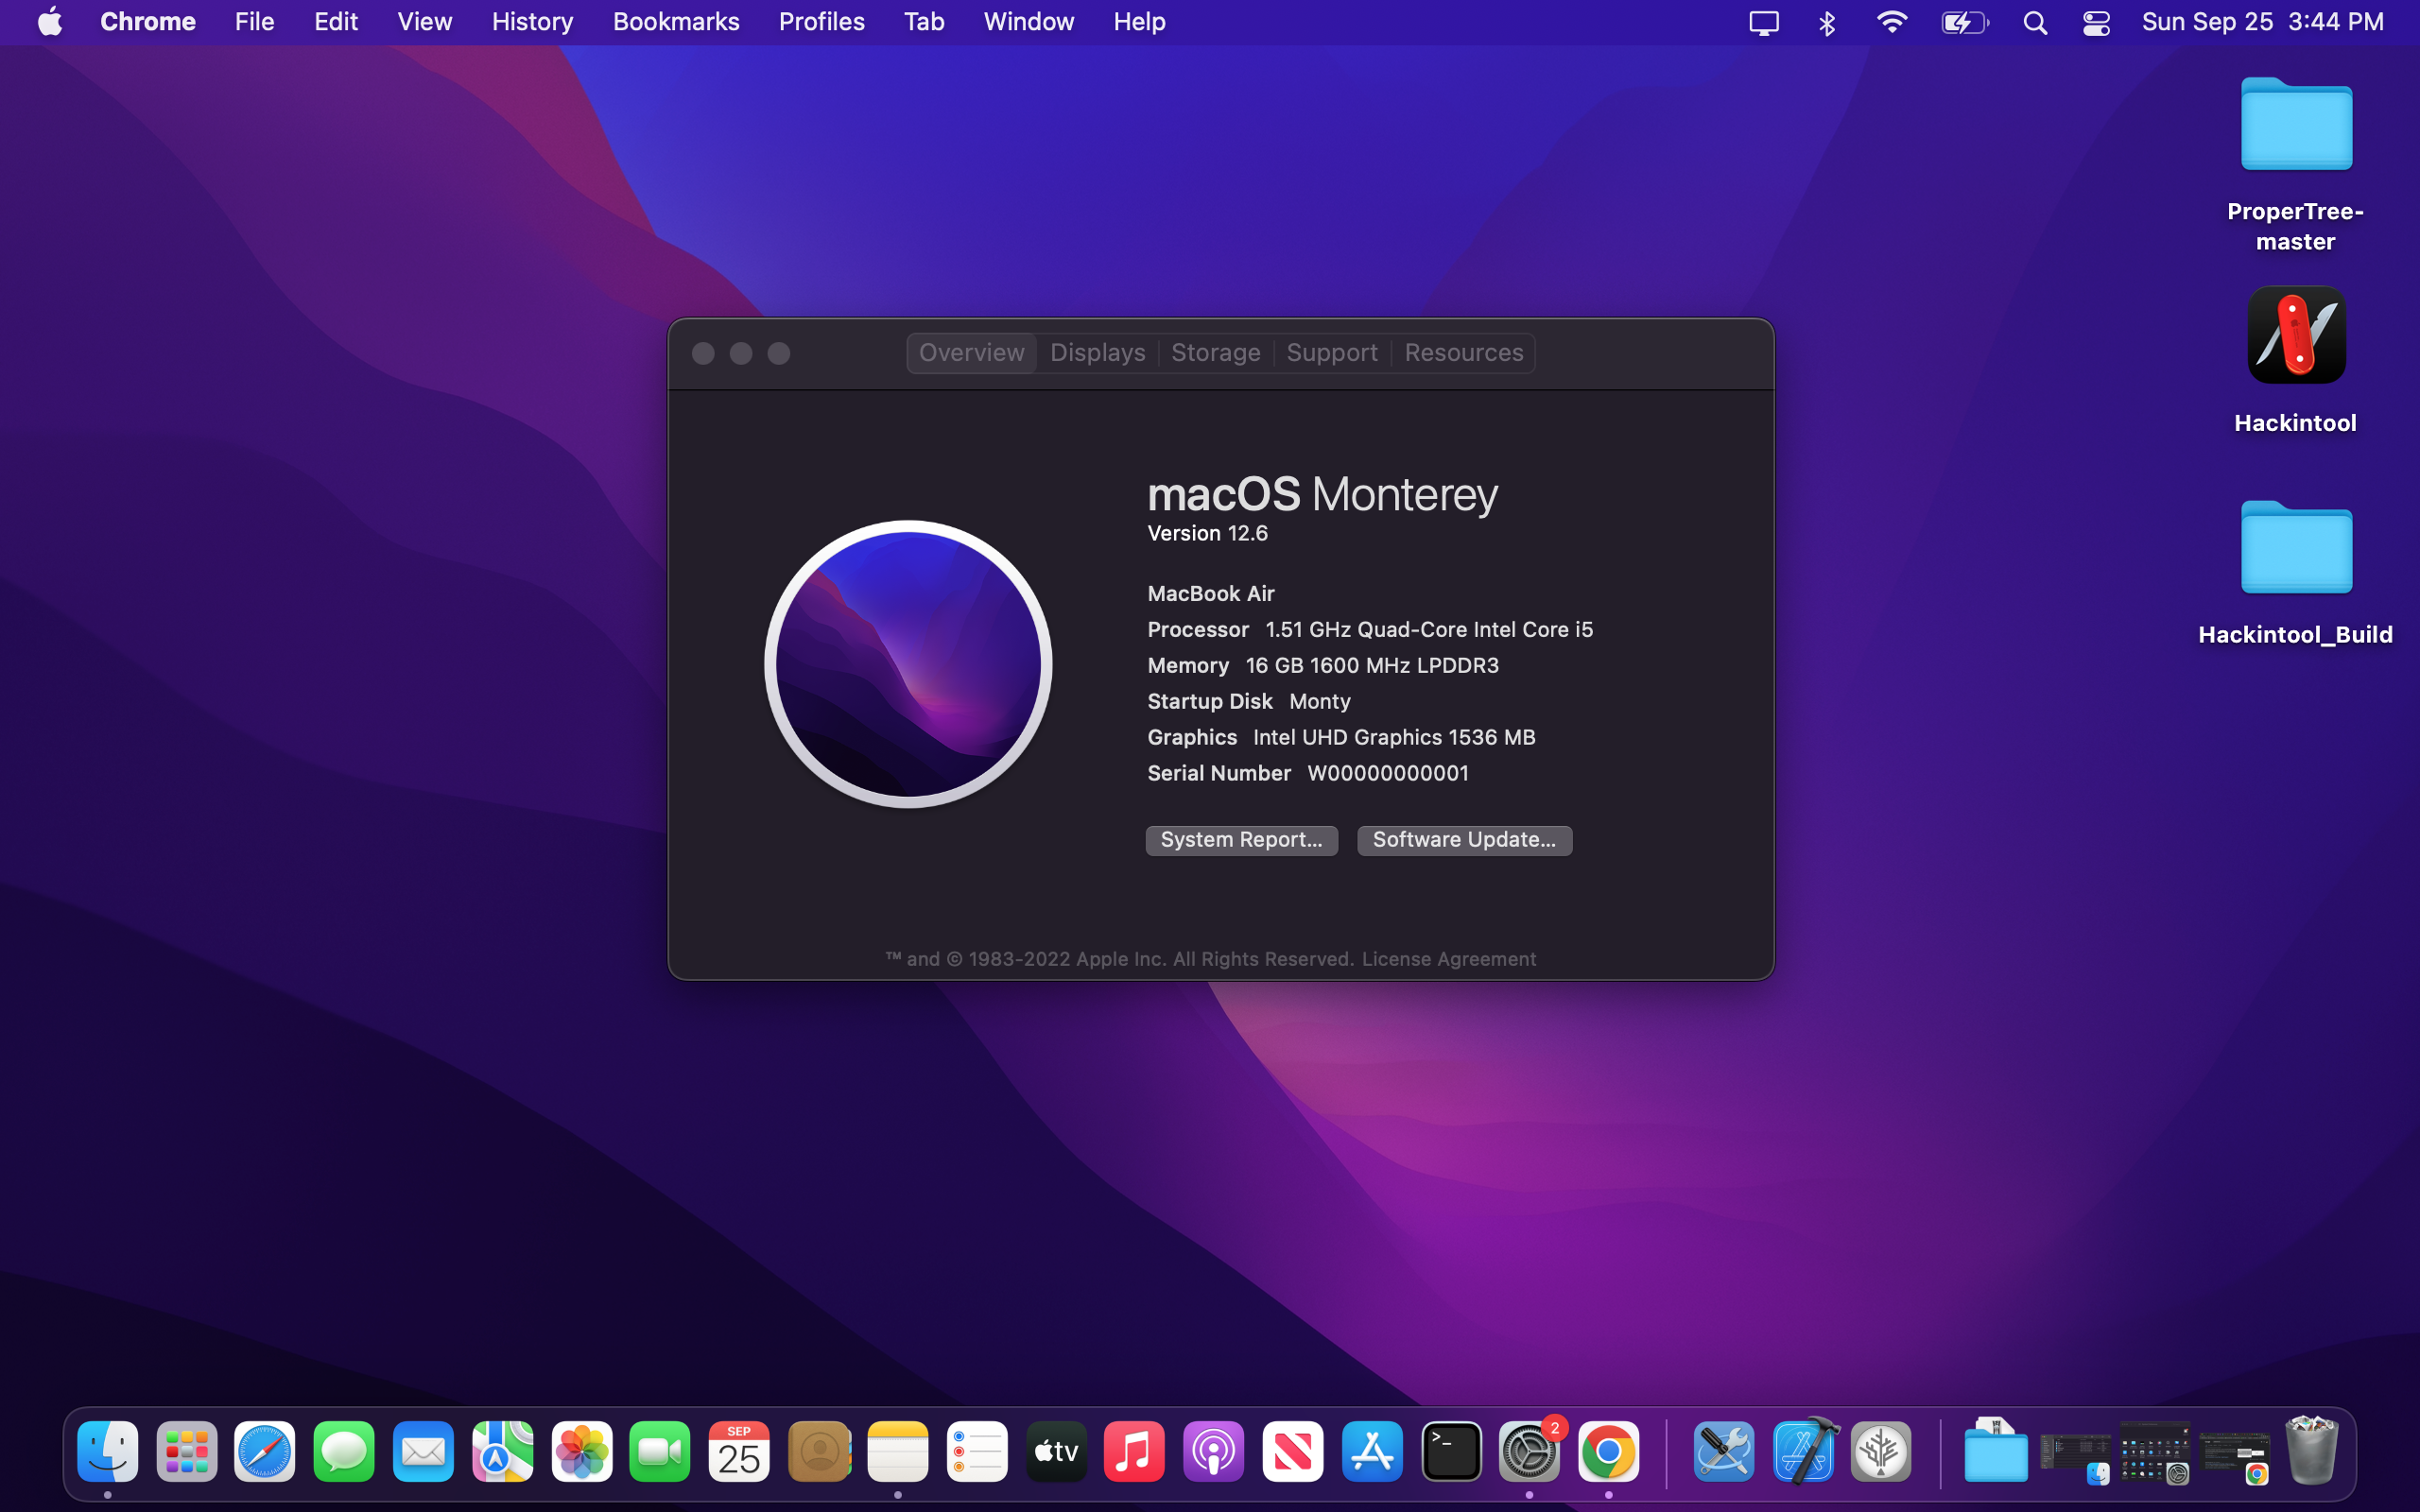 macOS Monterey 12.6 running on the GPD Pocket 2 m3-8100y